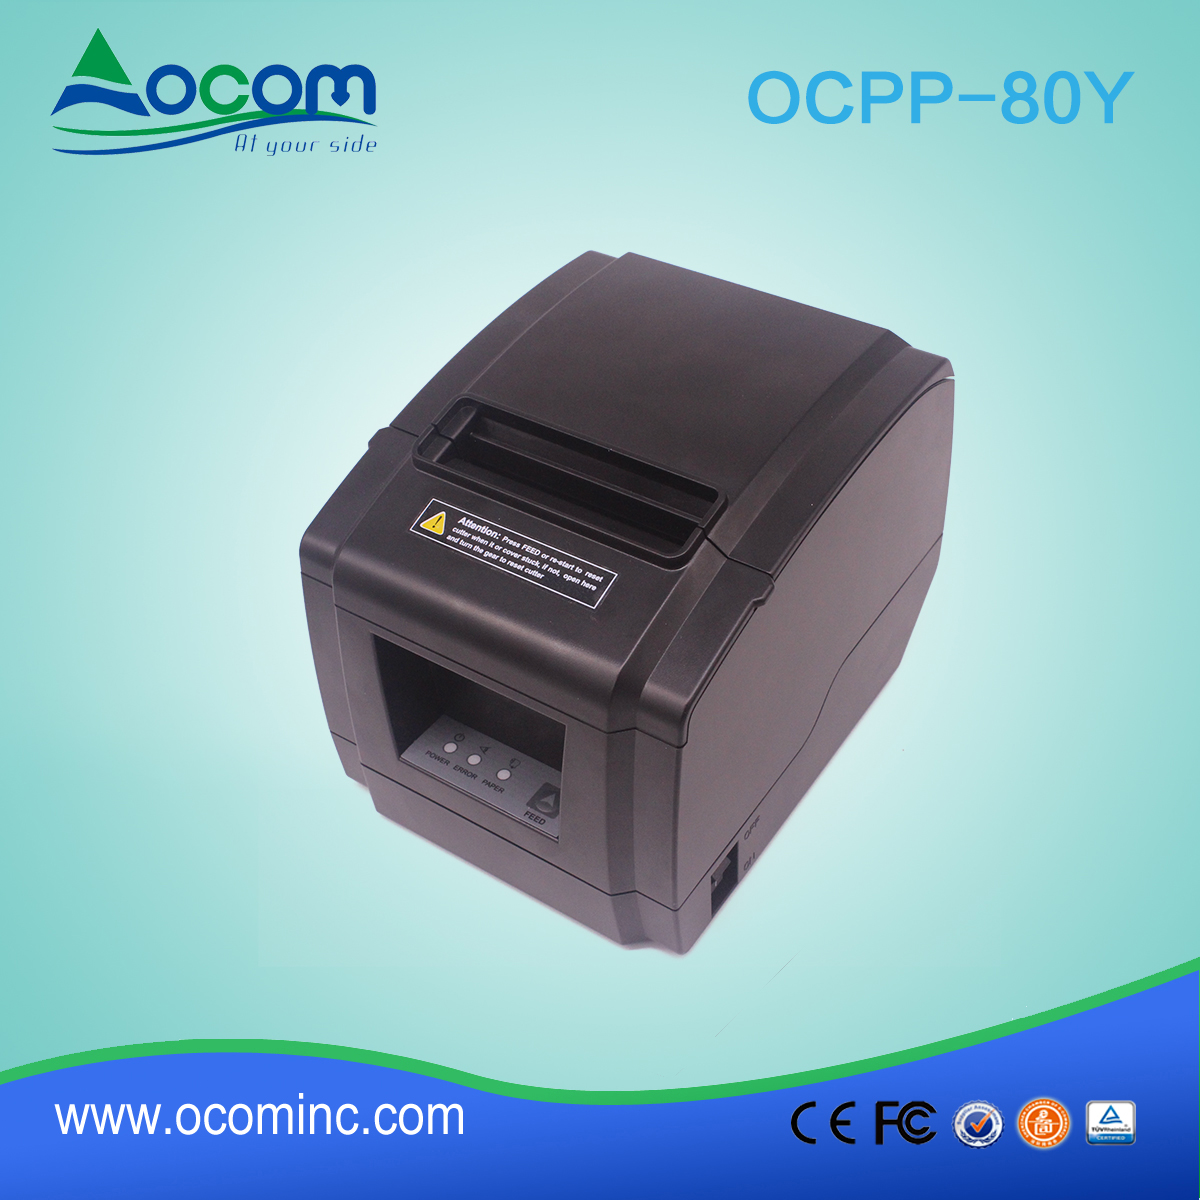 OCPP-80Y-China factory auto cutter 80mm POS receipt printer